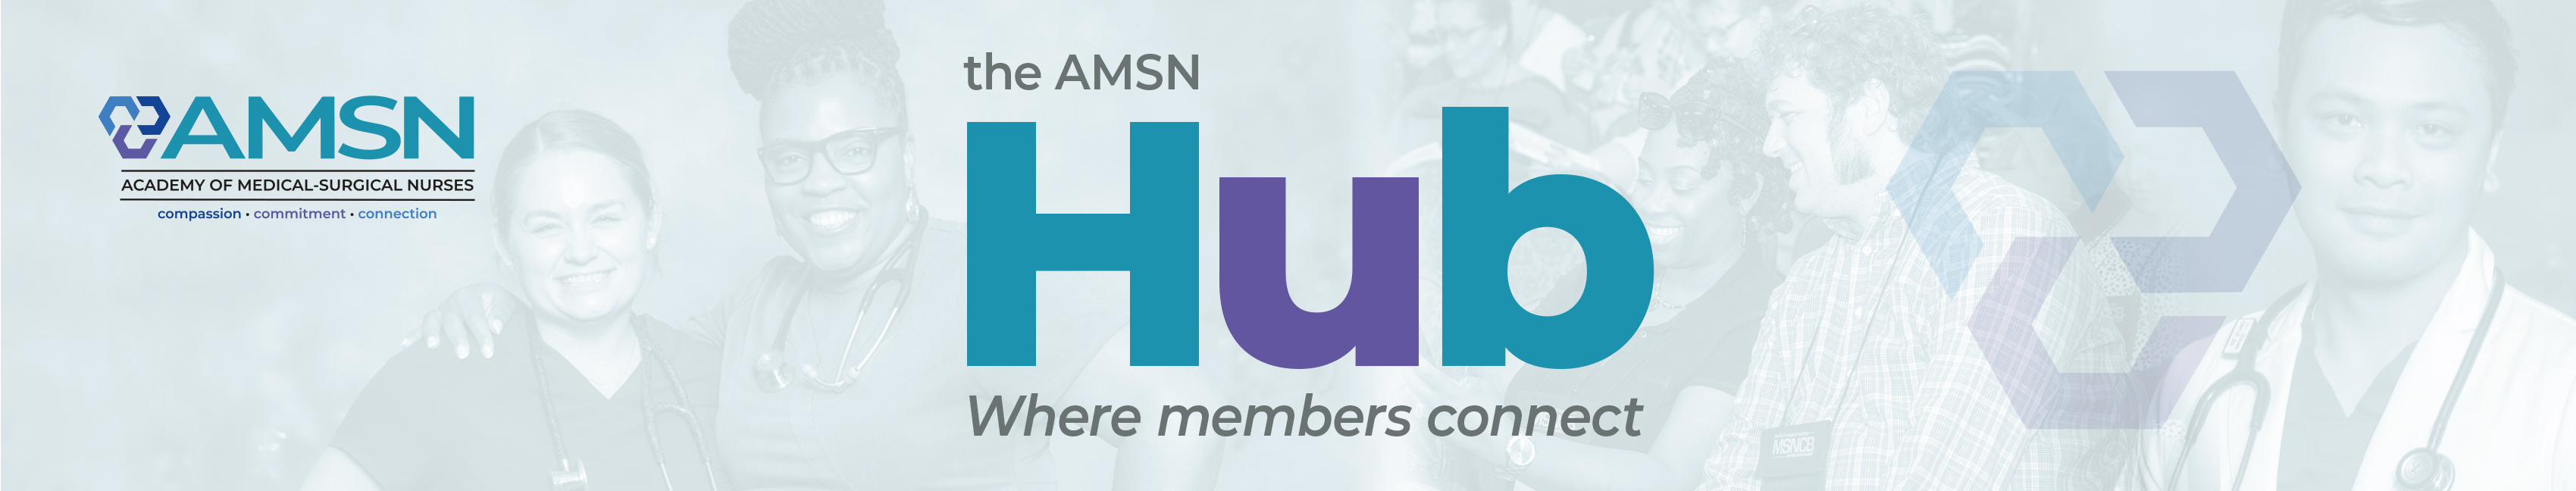 The AMSN Community Hub